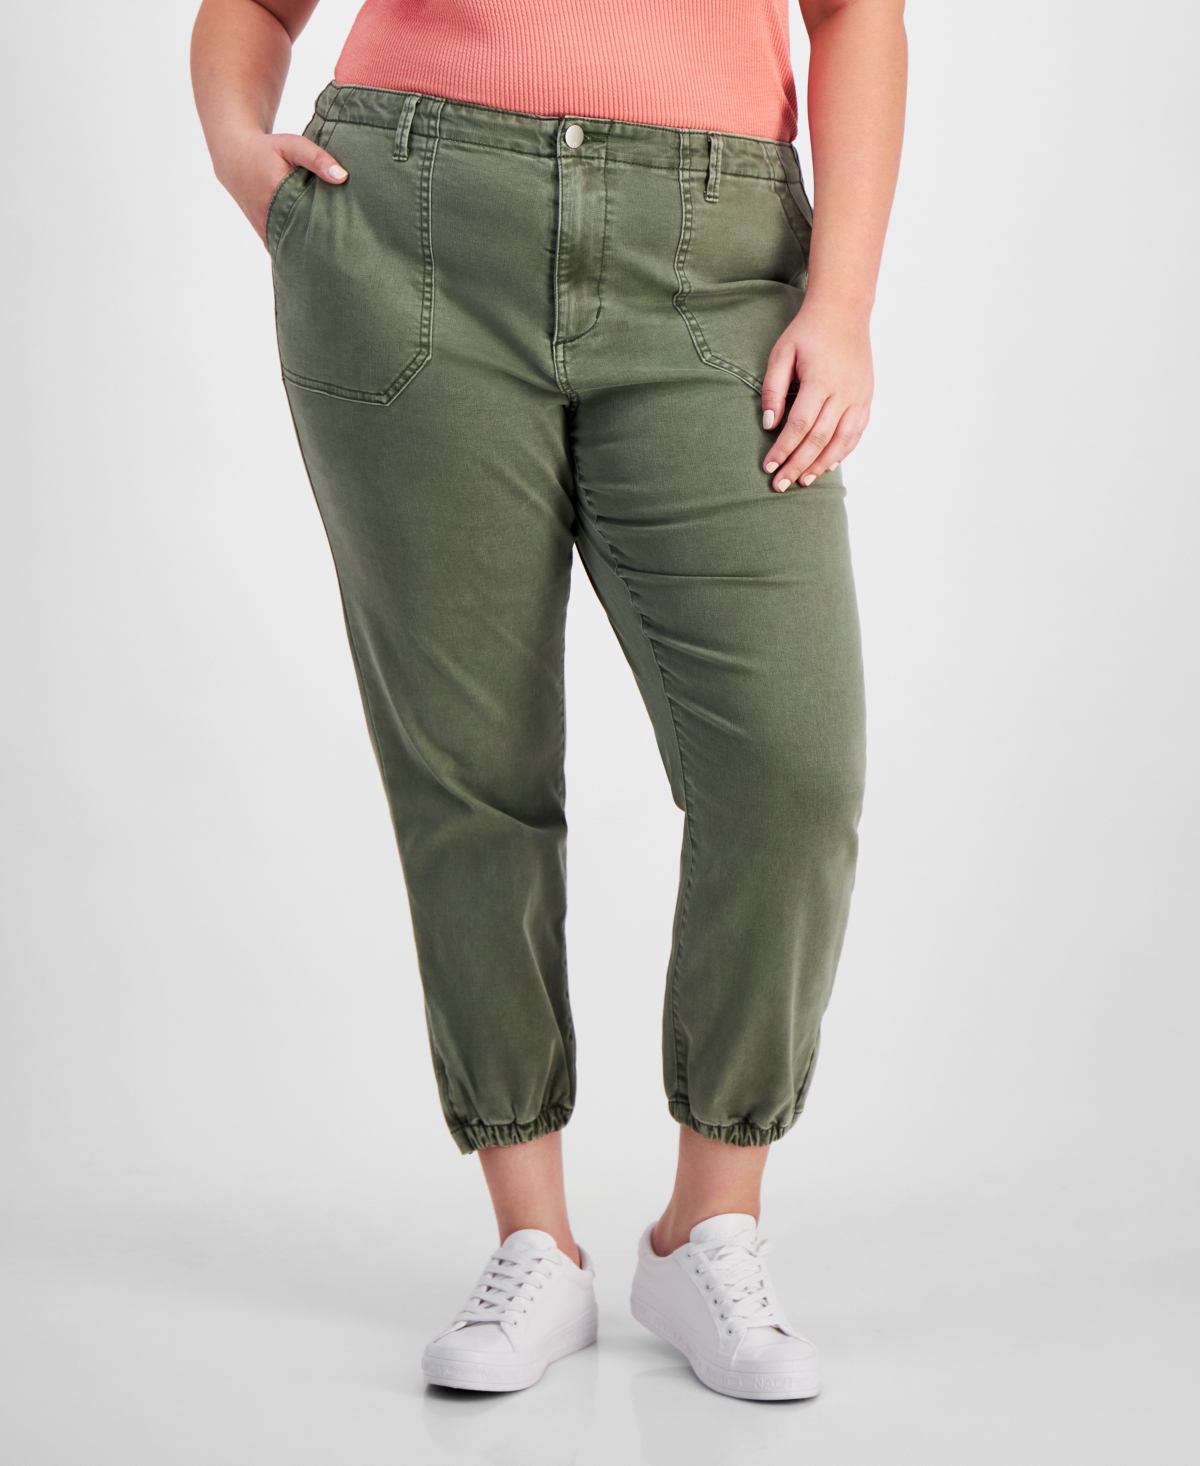 Trendy Plus Size Elastic-Hem Pants, Created for Macy's - Oregano